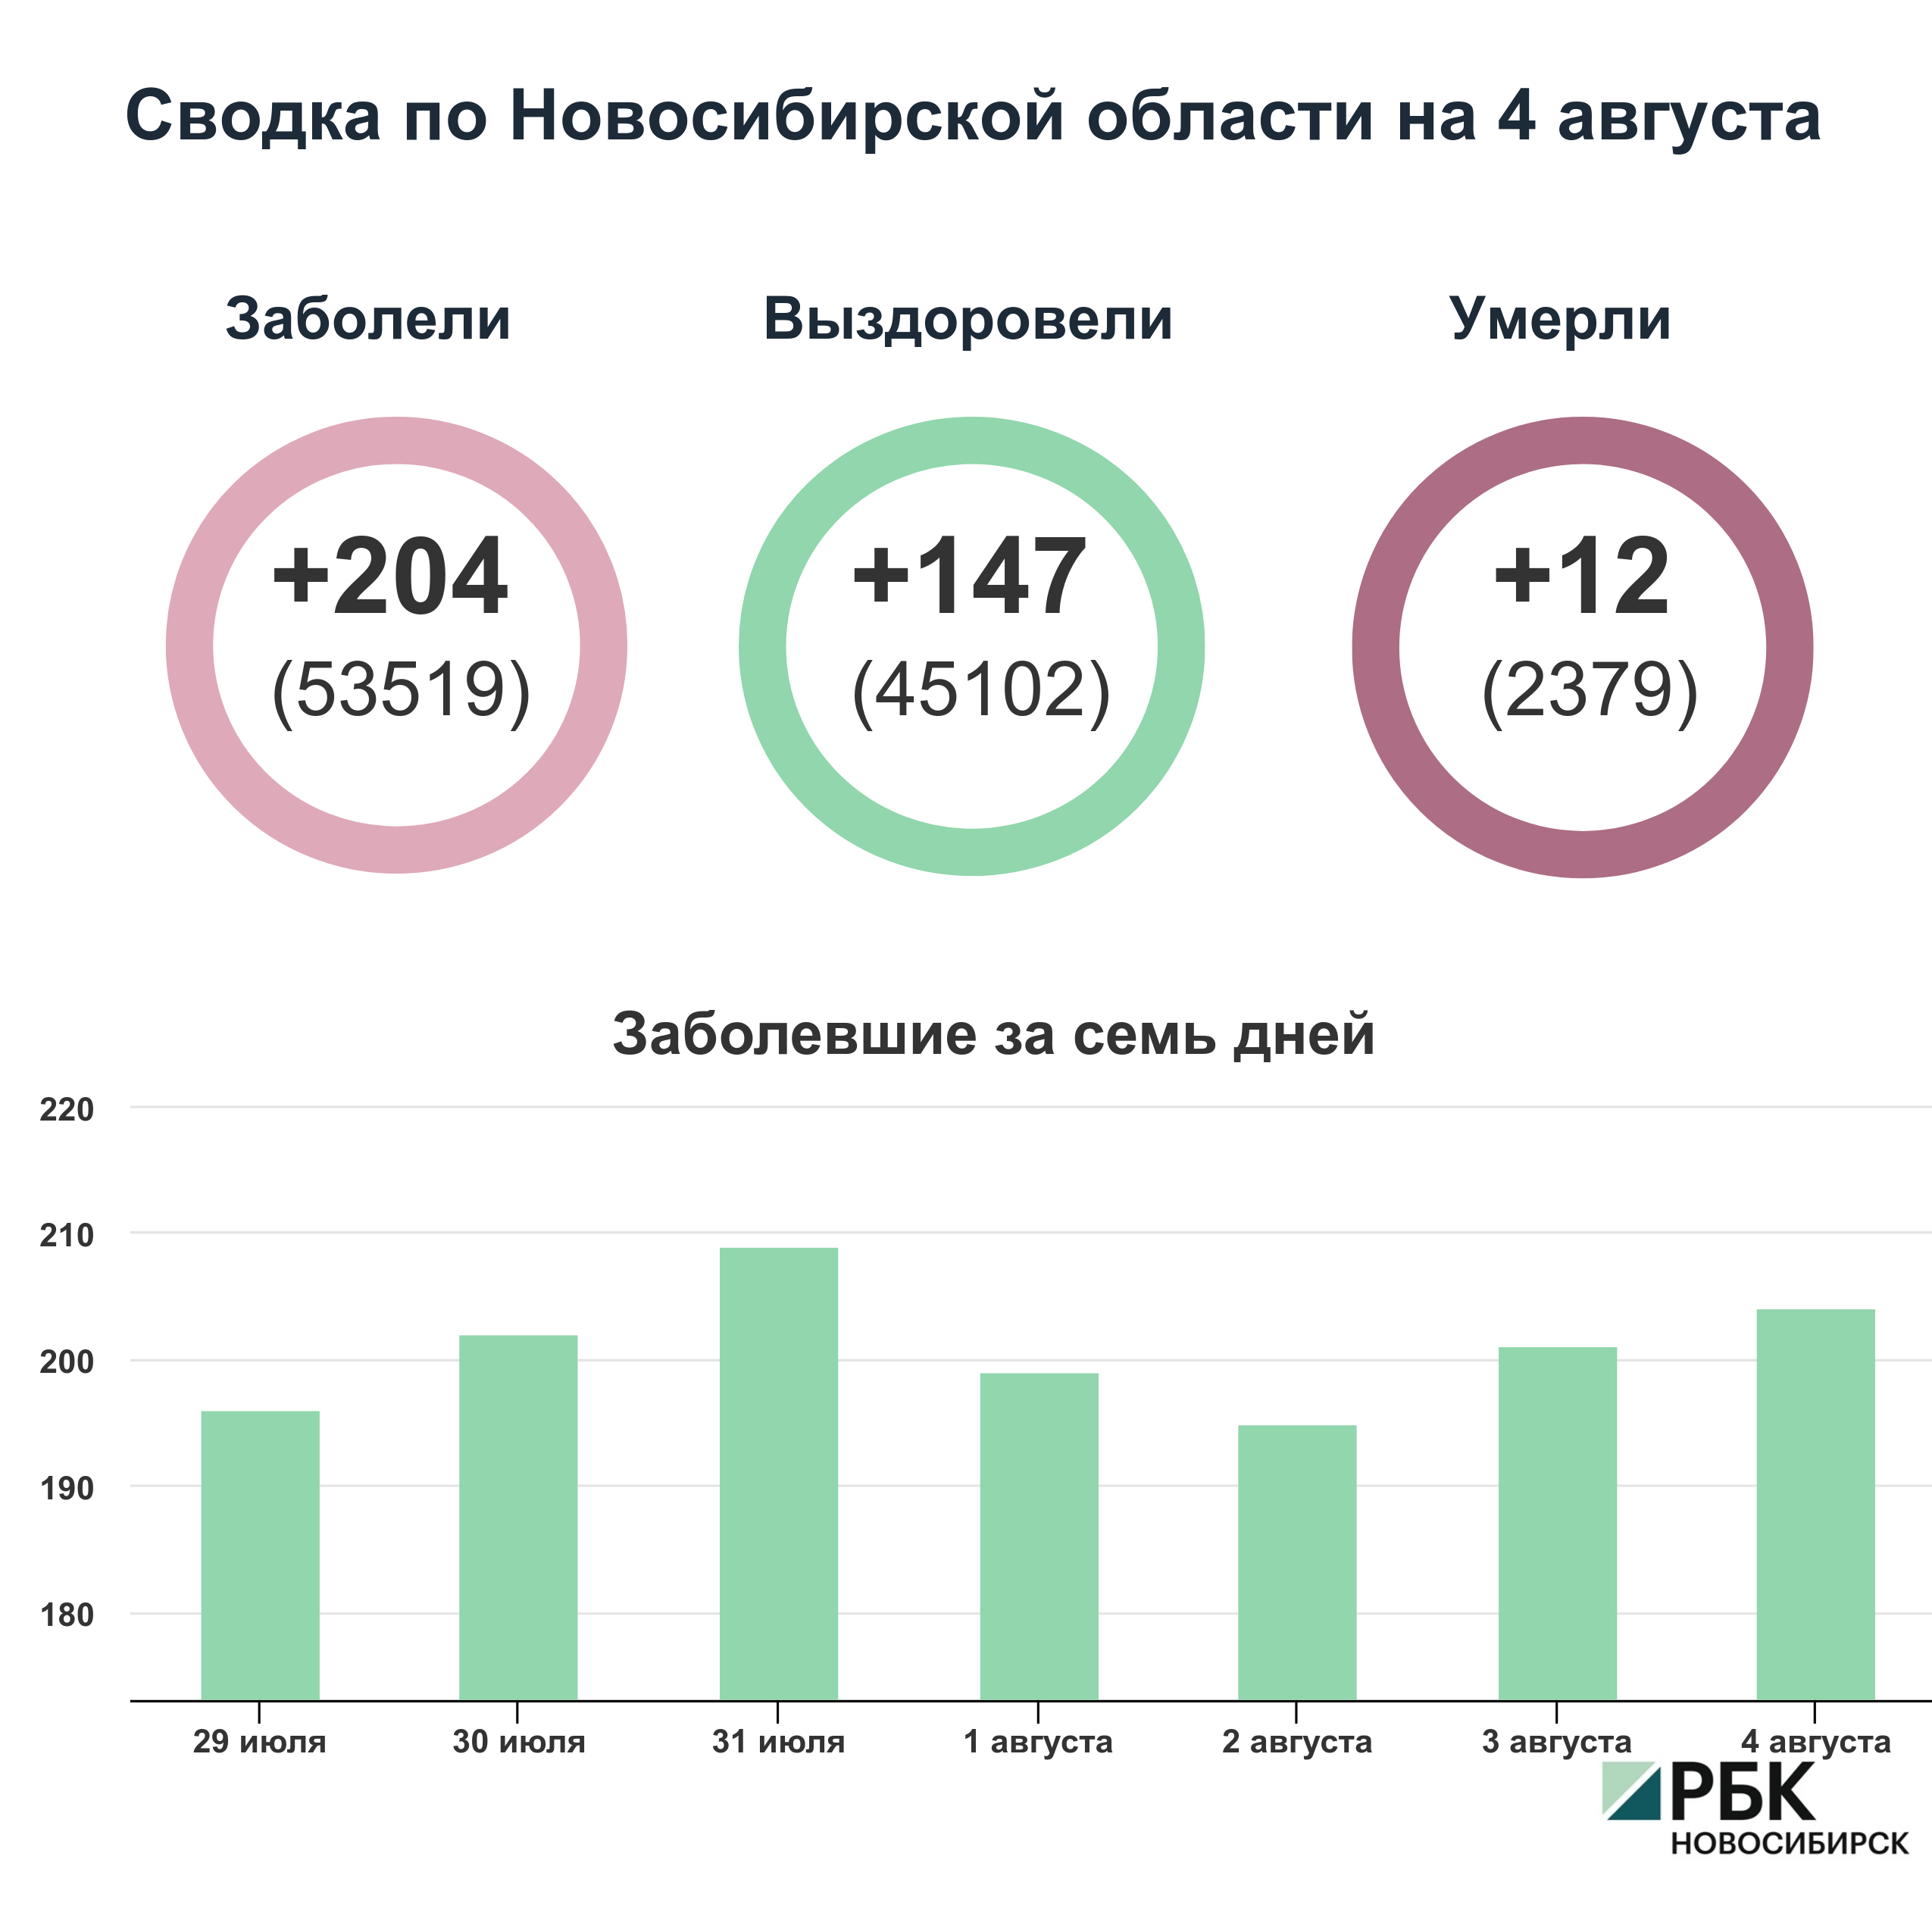 Коронавирус в Новосибирске: сводка на 4 августа